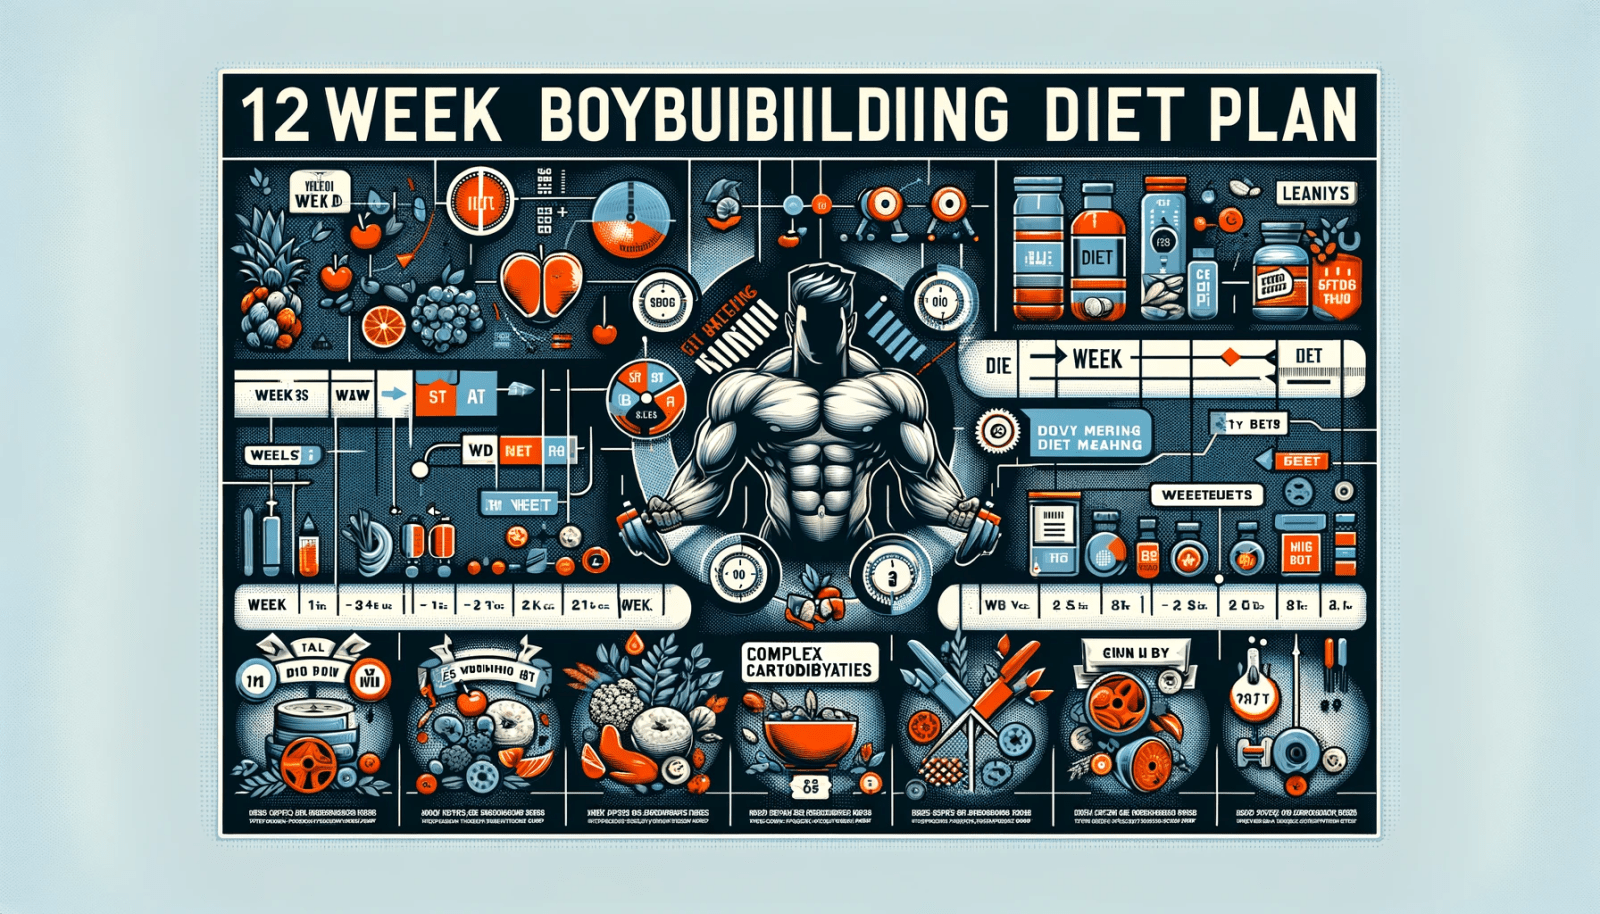 Transform Your Physique: Expert-Driven 12-Week Bodybuilding Cutting Diet Plan